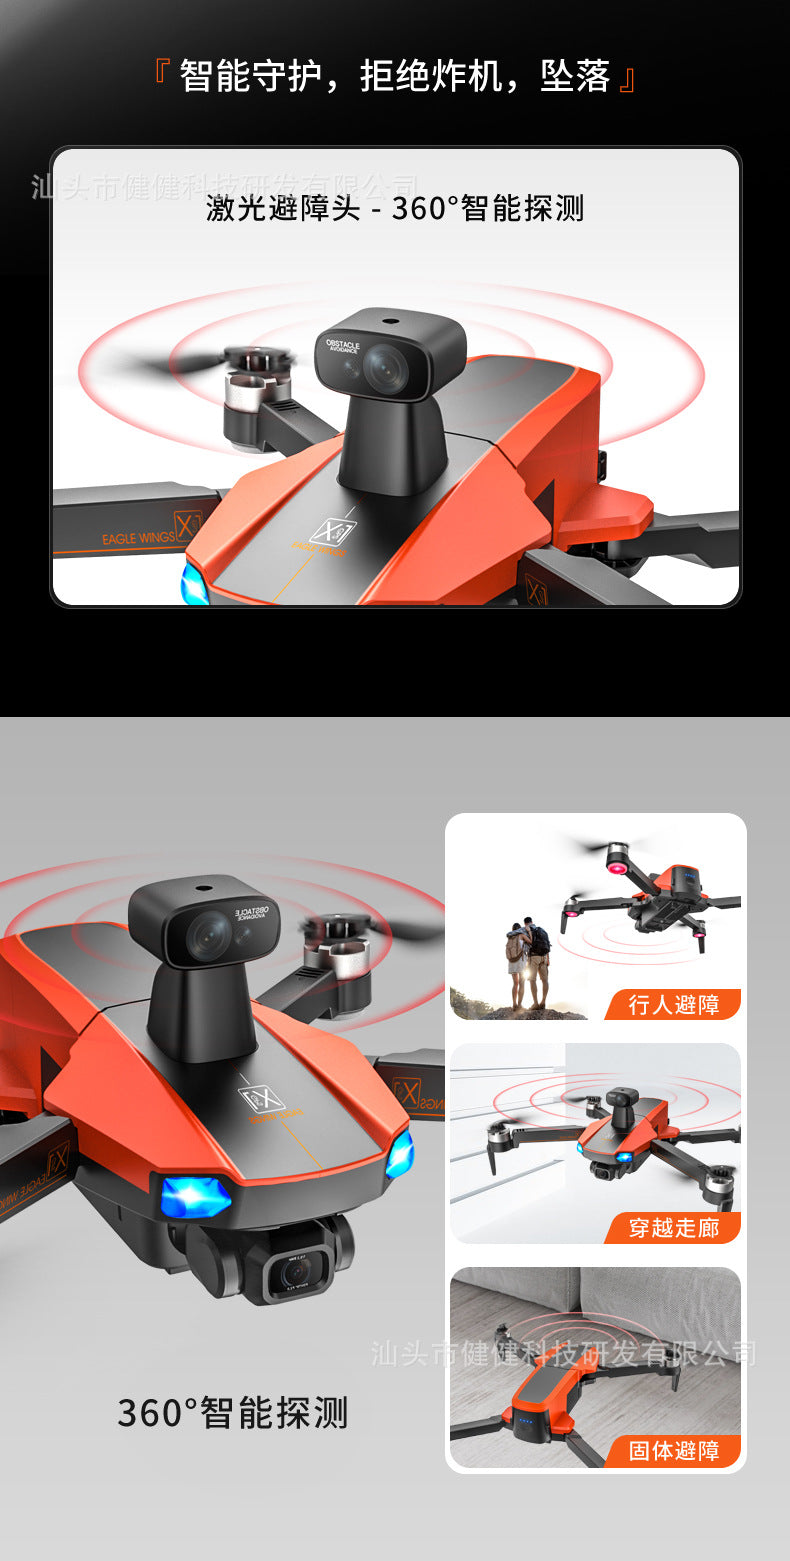 Eagle wings x1 JJRC X22 drone, [Model:]JJRC-X1 UAV (GPS/Optical 